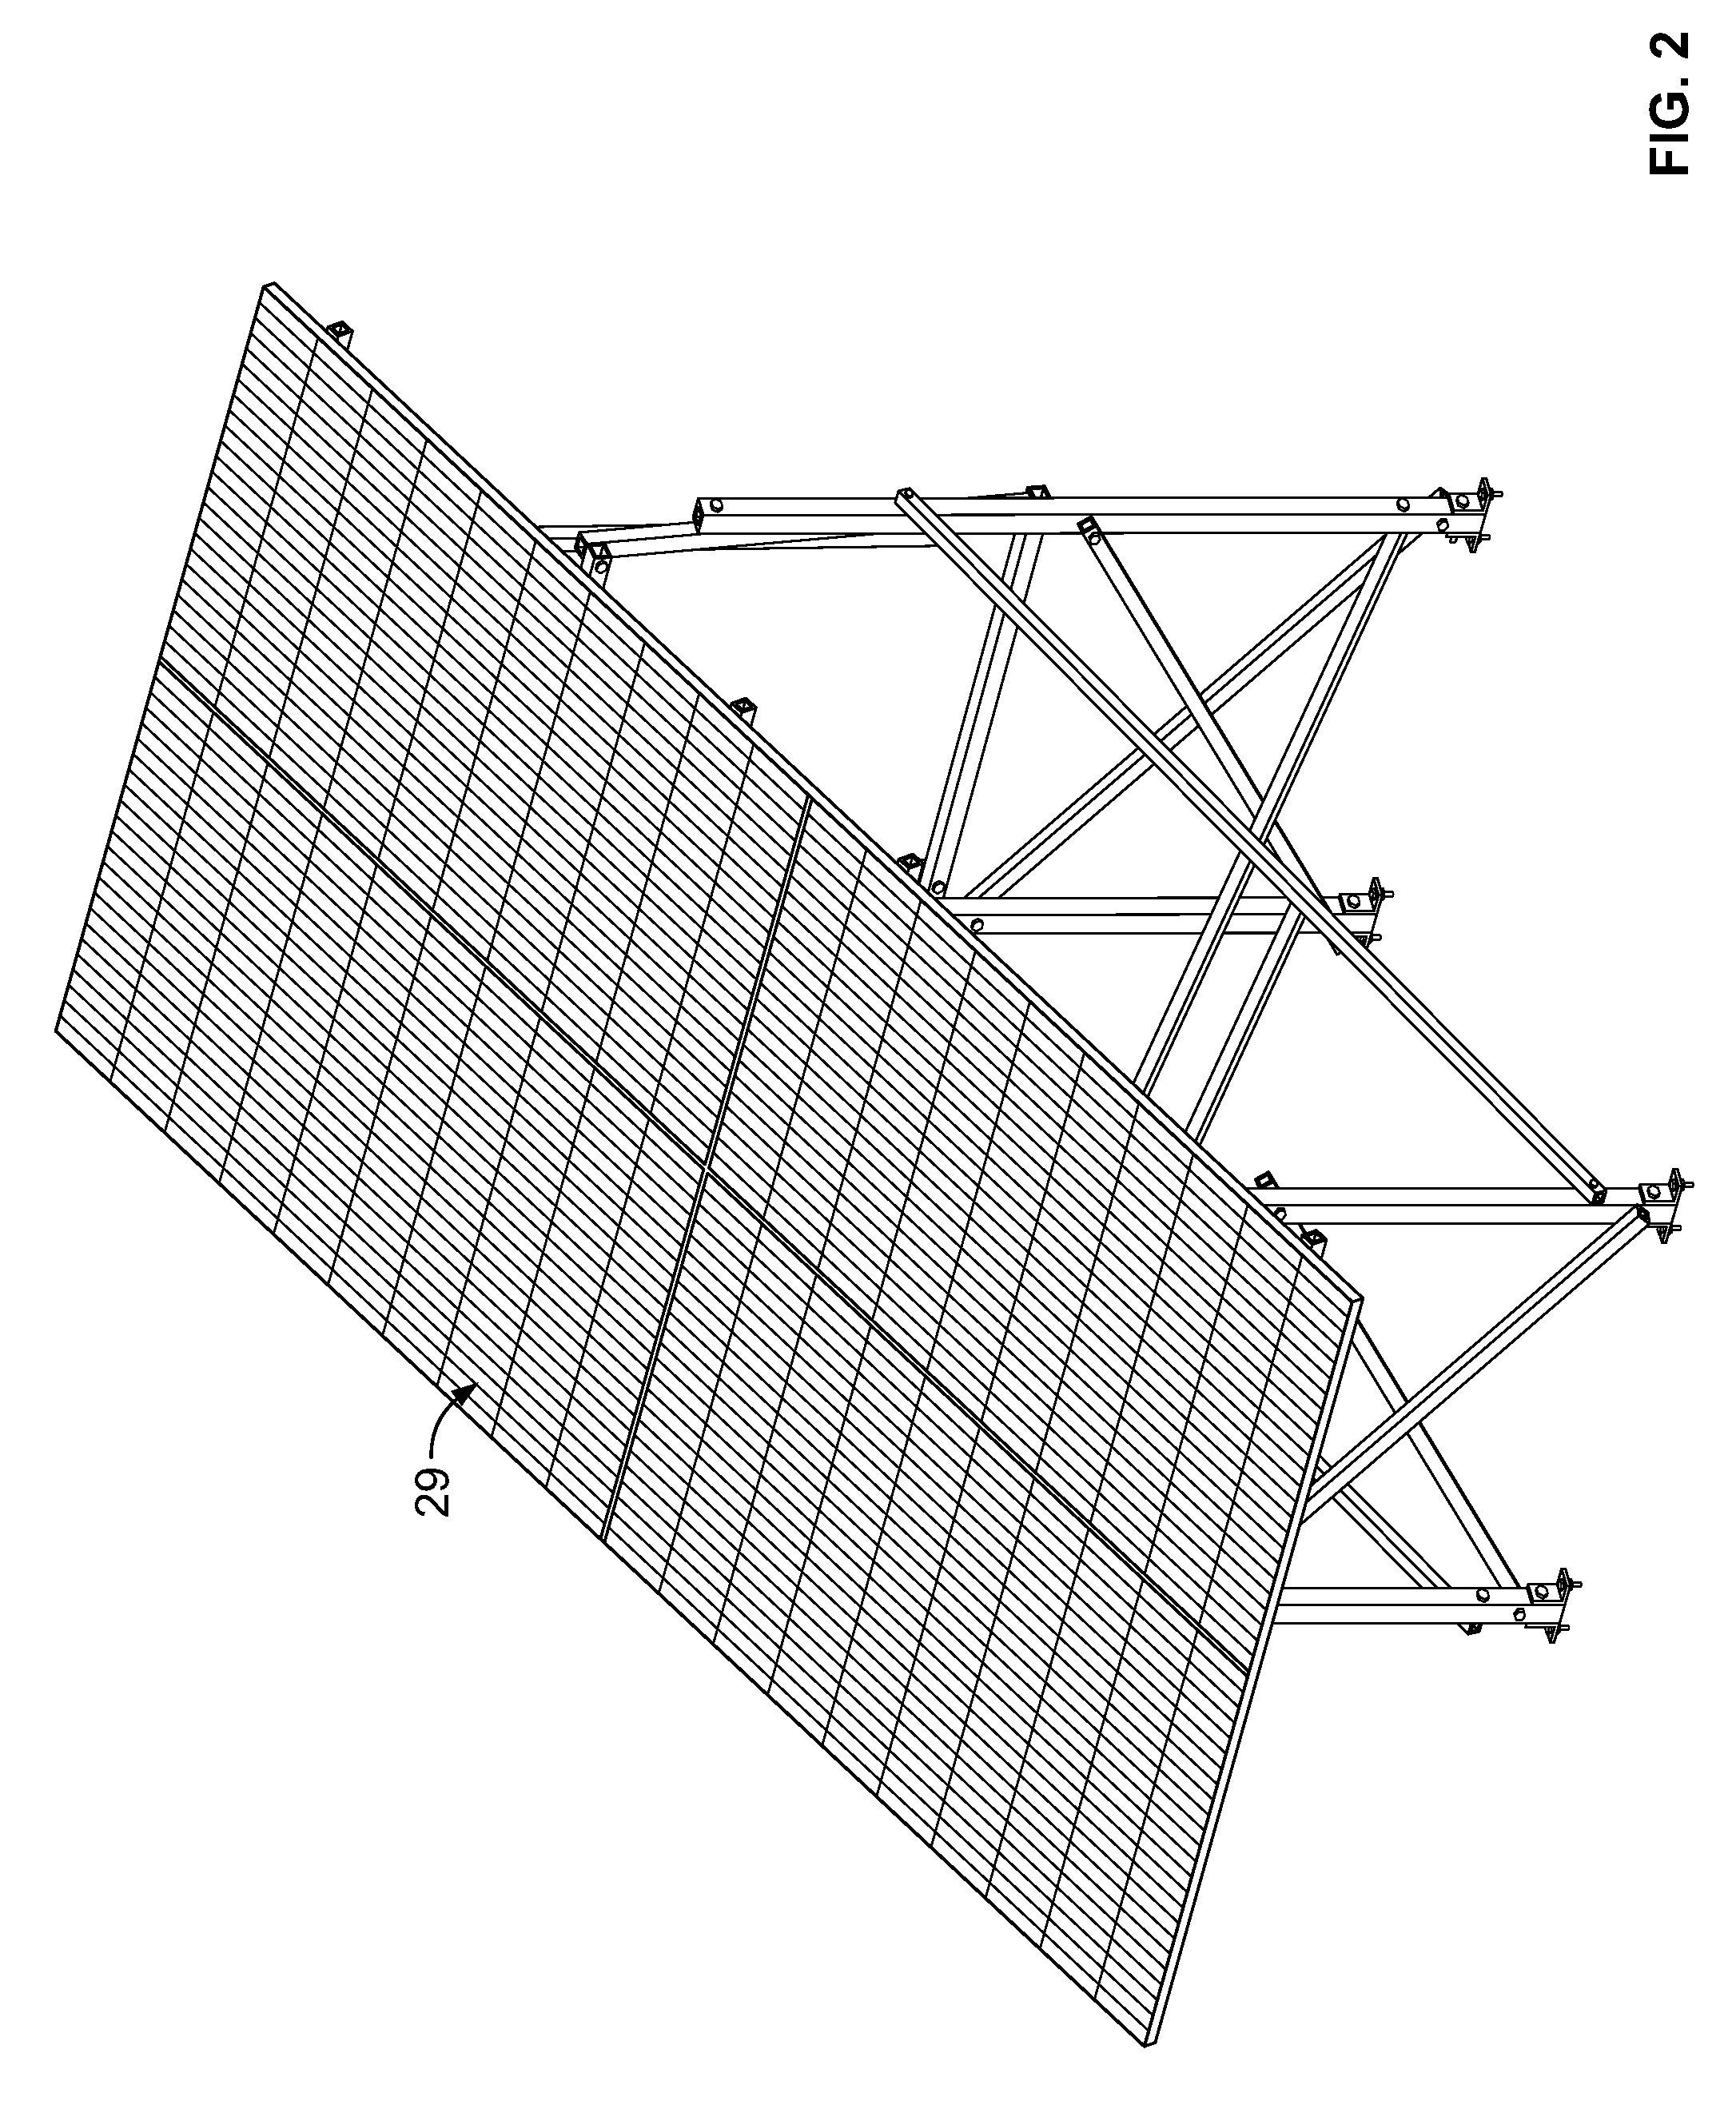 Multi-position solar panel rack